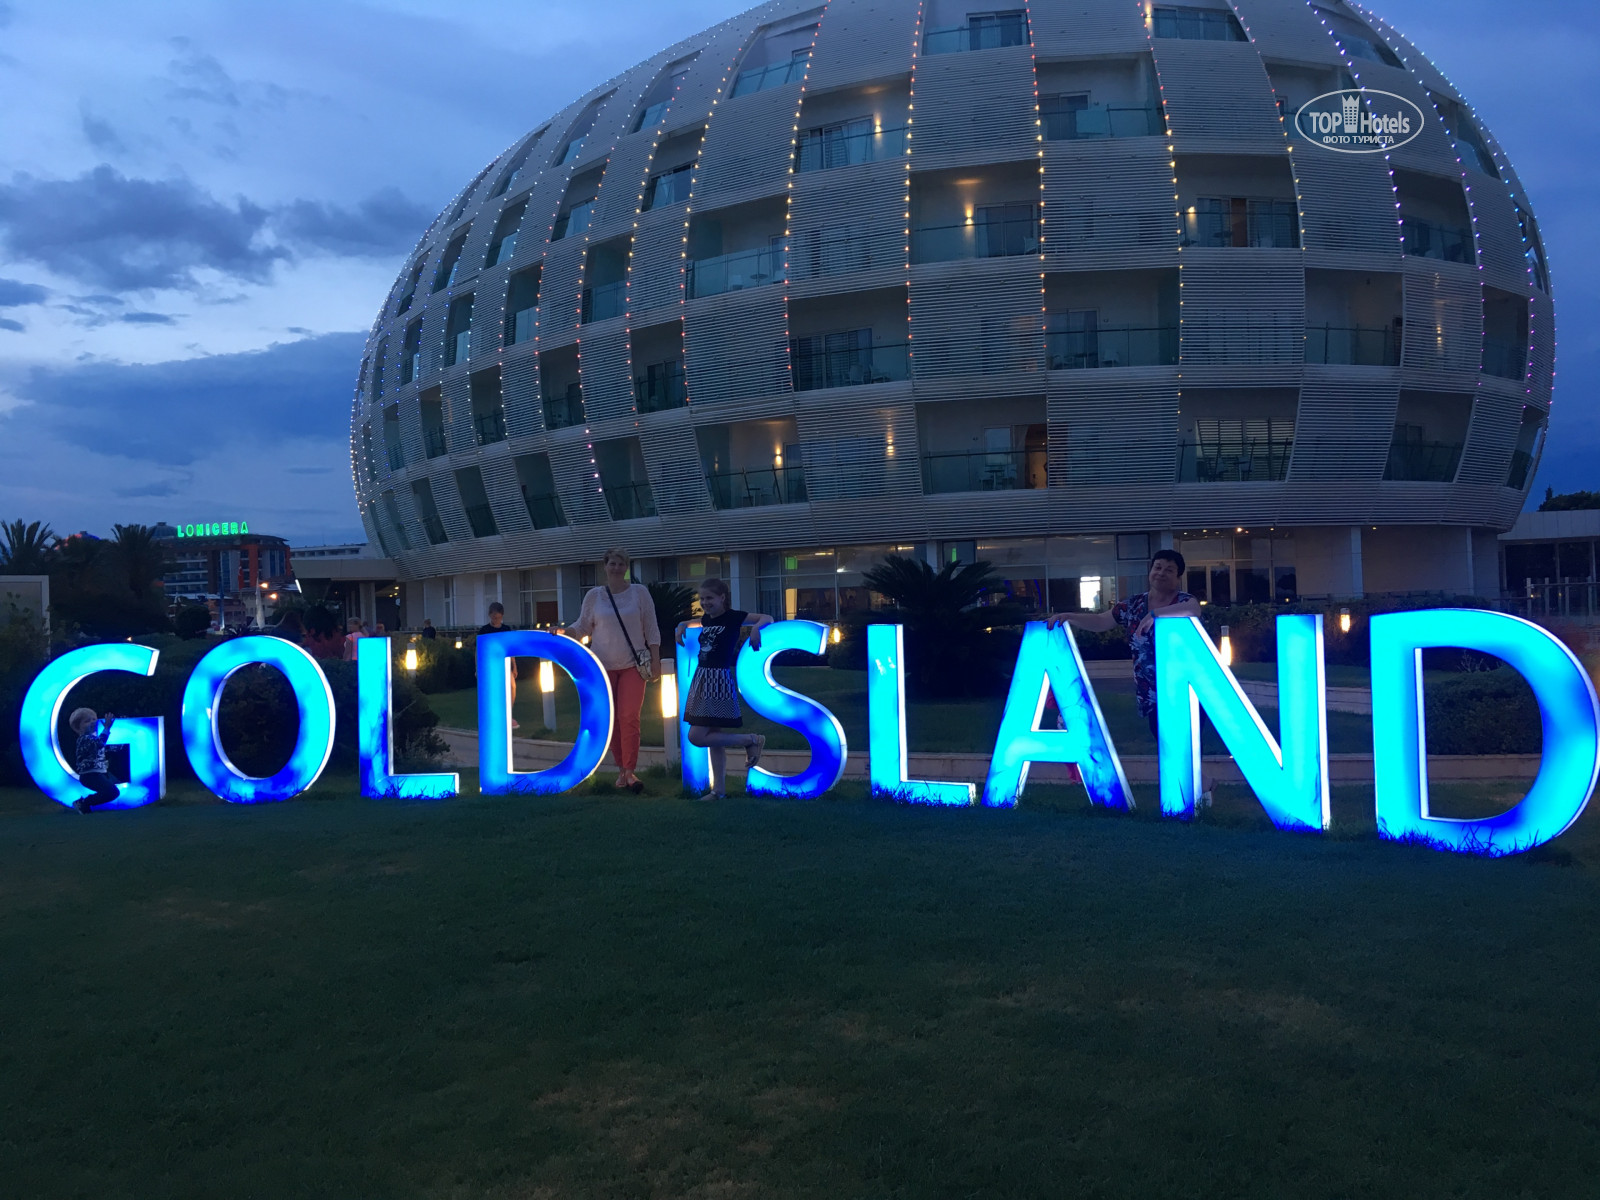 Gold island selected 5. Gold Island 5 Турция. Gold Island 5 ***** (Тюрклер). Голд Исланд Турция 5 звезд. Gold Island 5 корпуса.